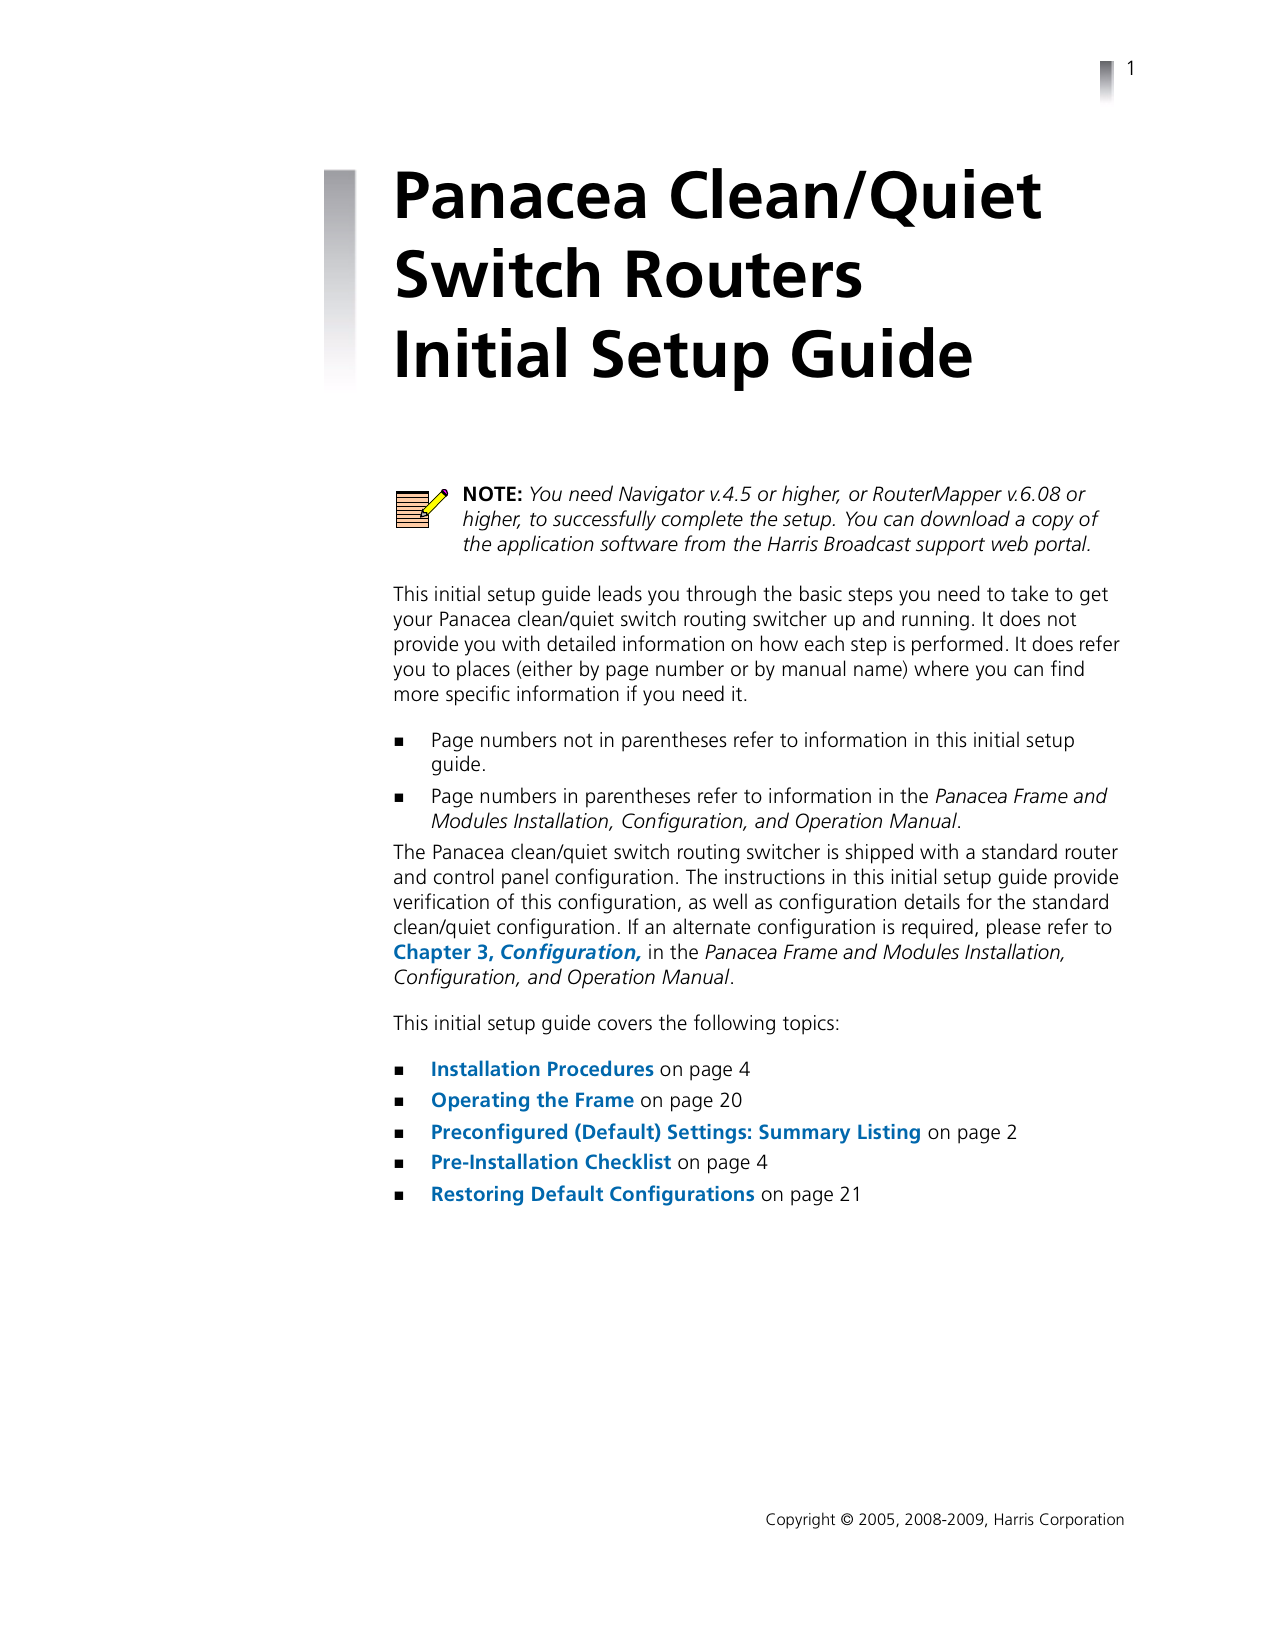 harris router mapper software downloads